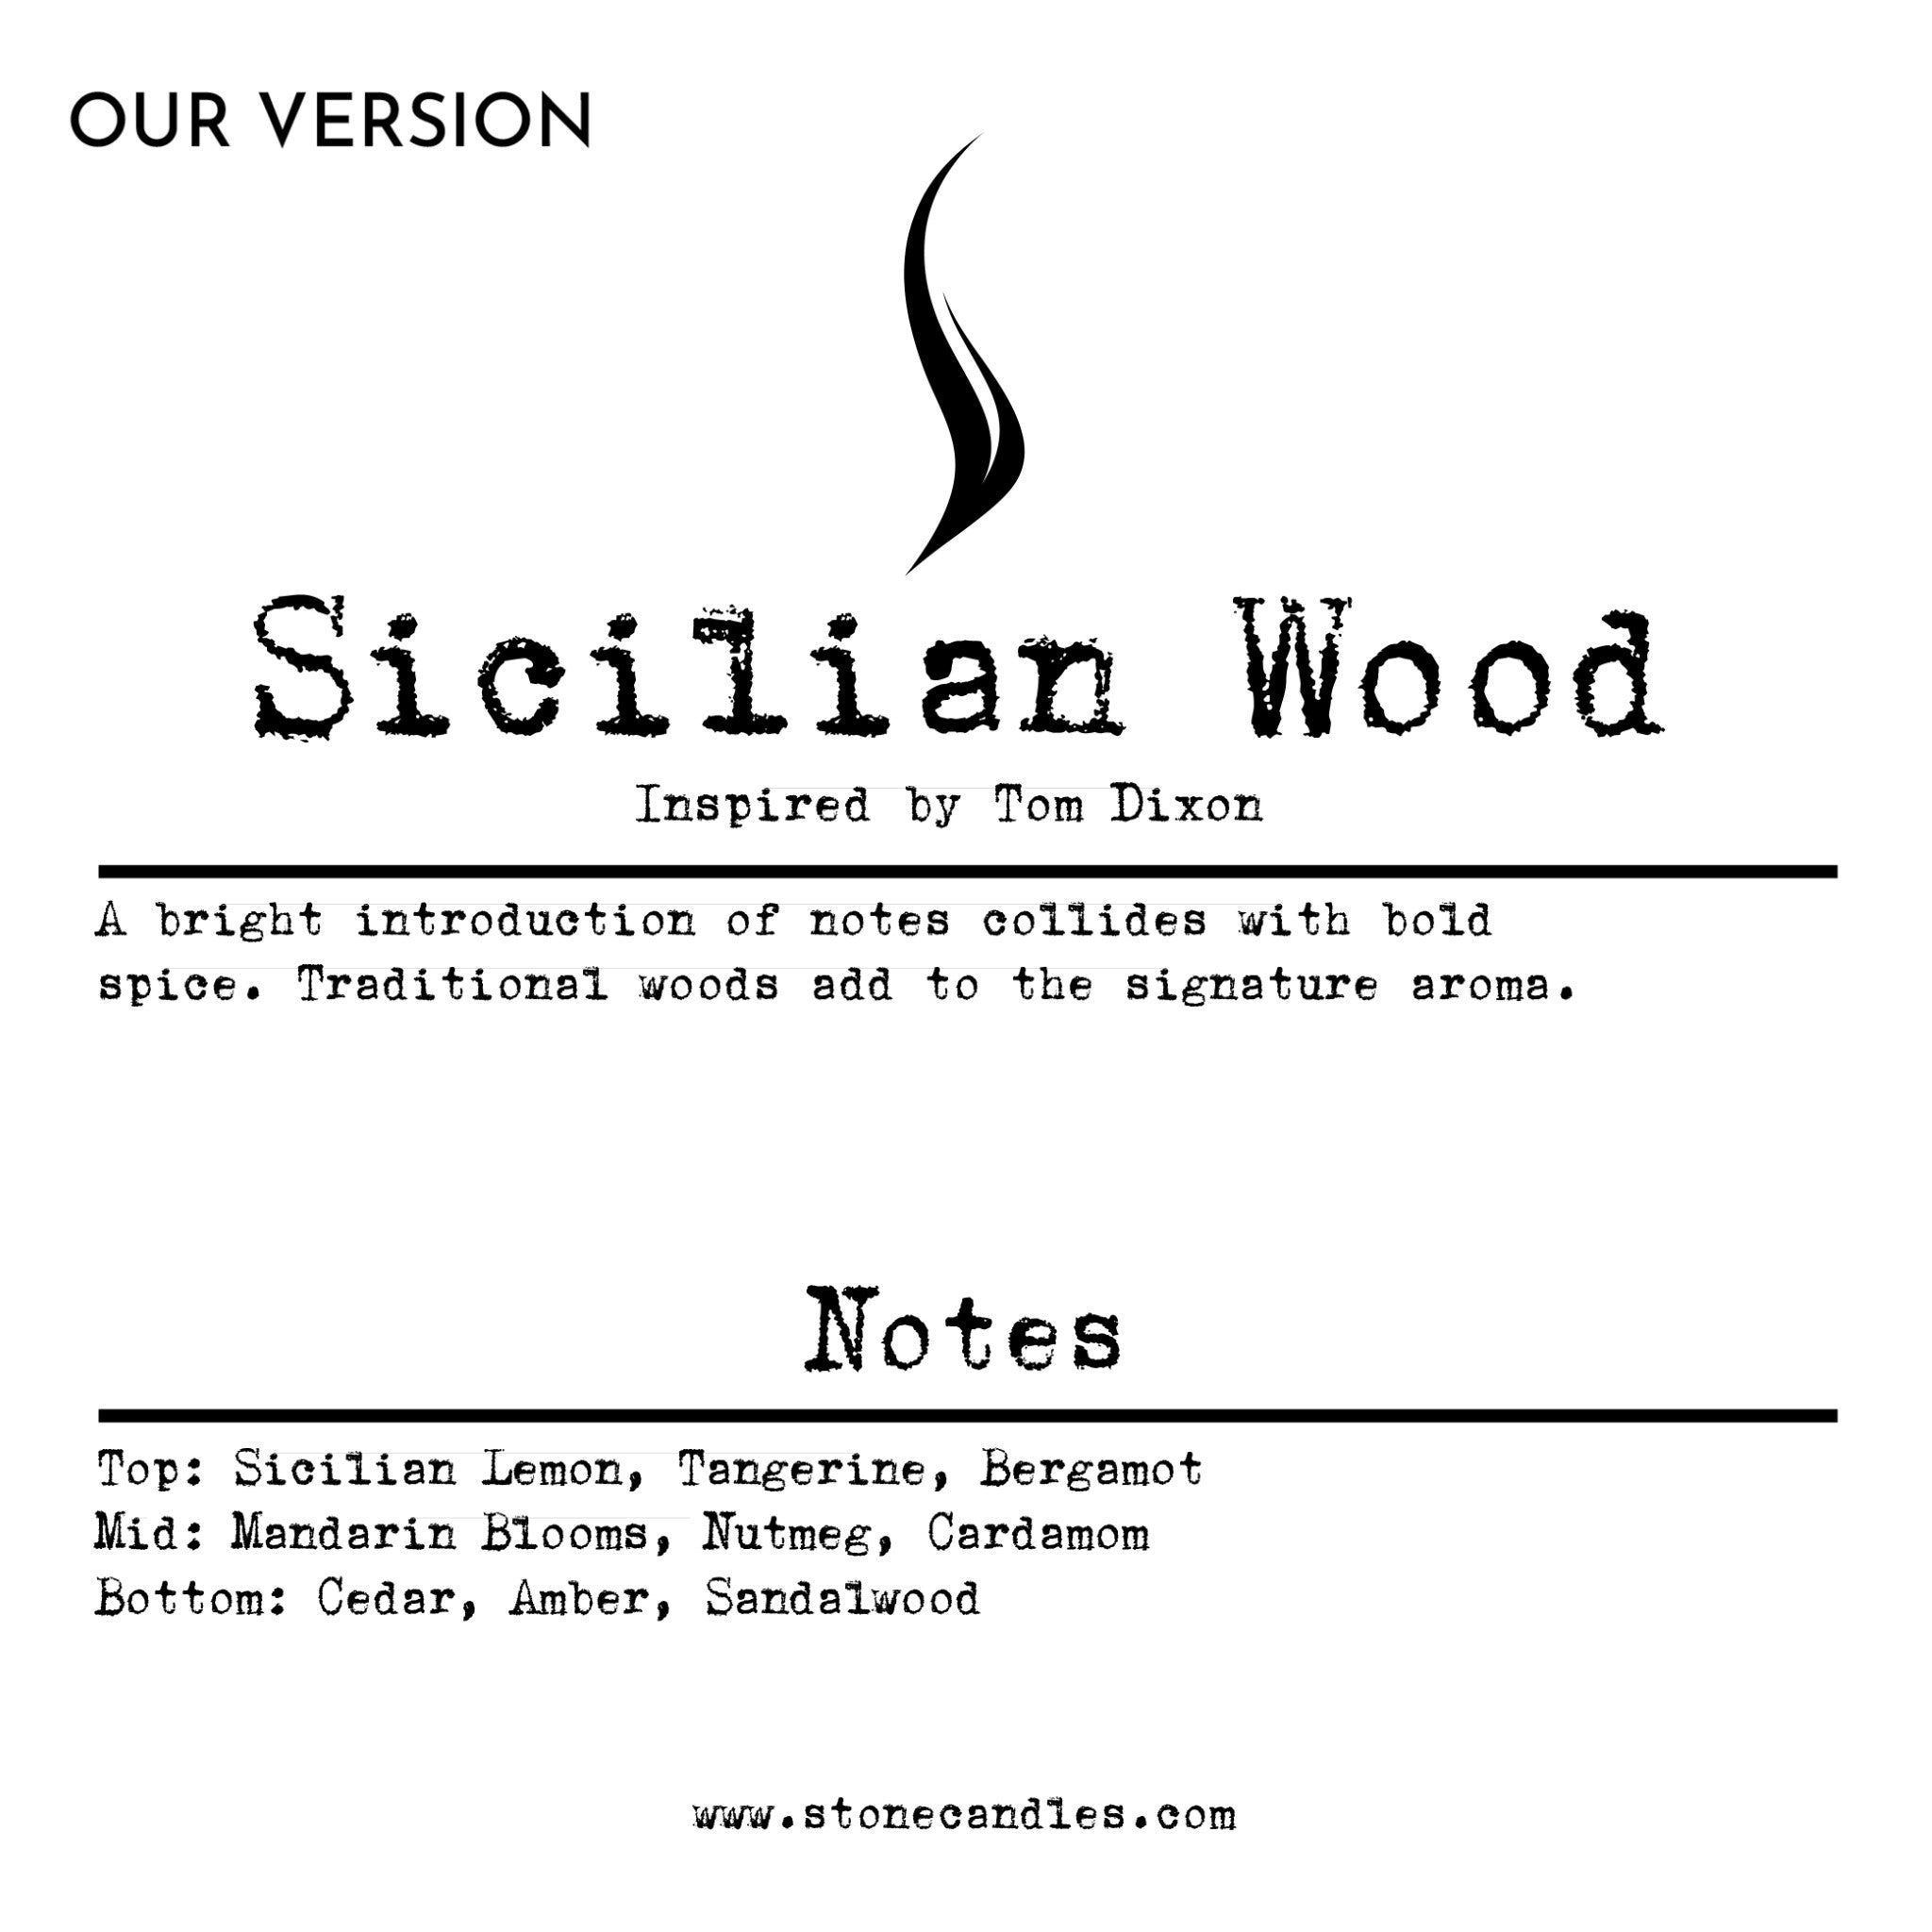 Sicilian Wood (our version) Sample Scent Strip